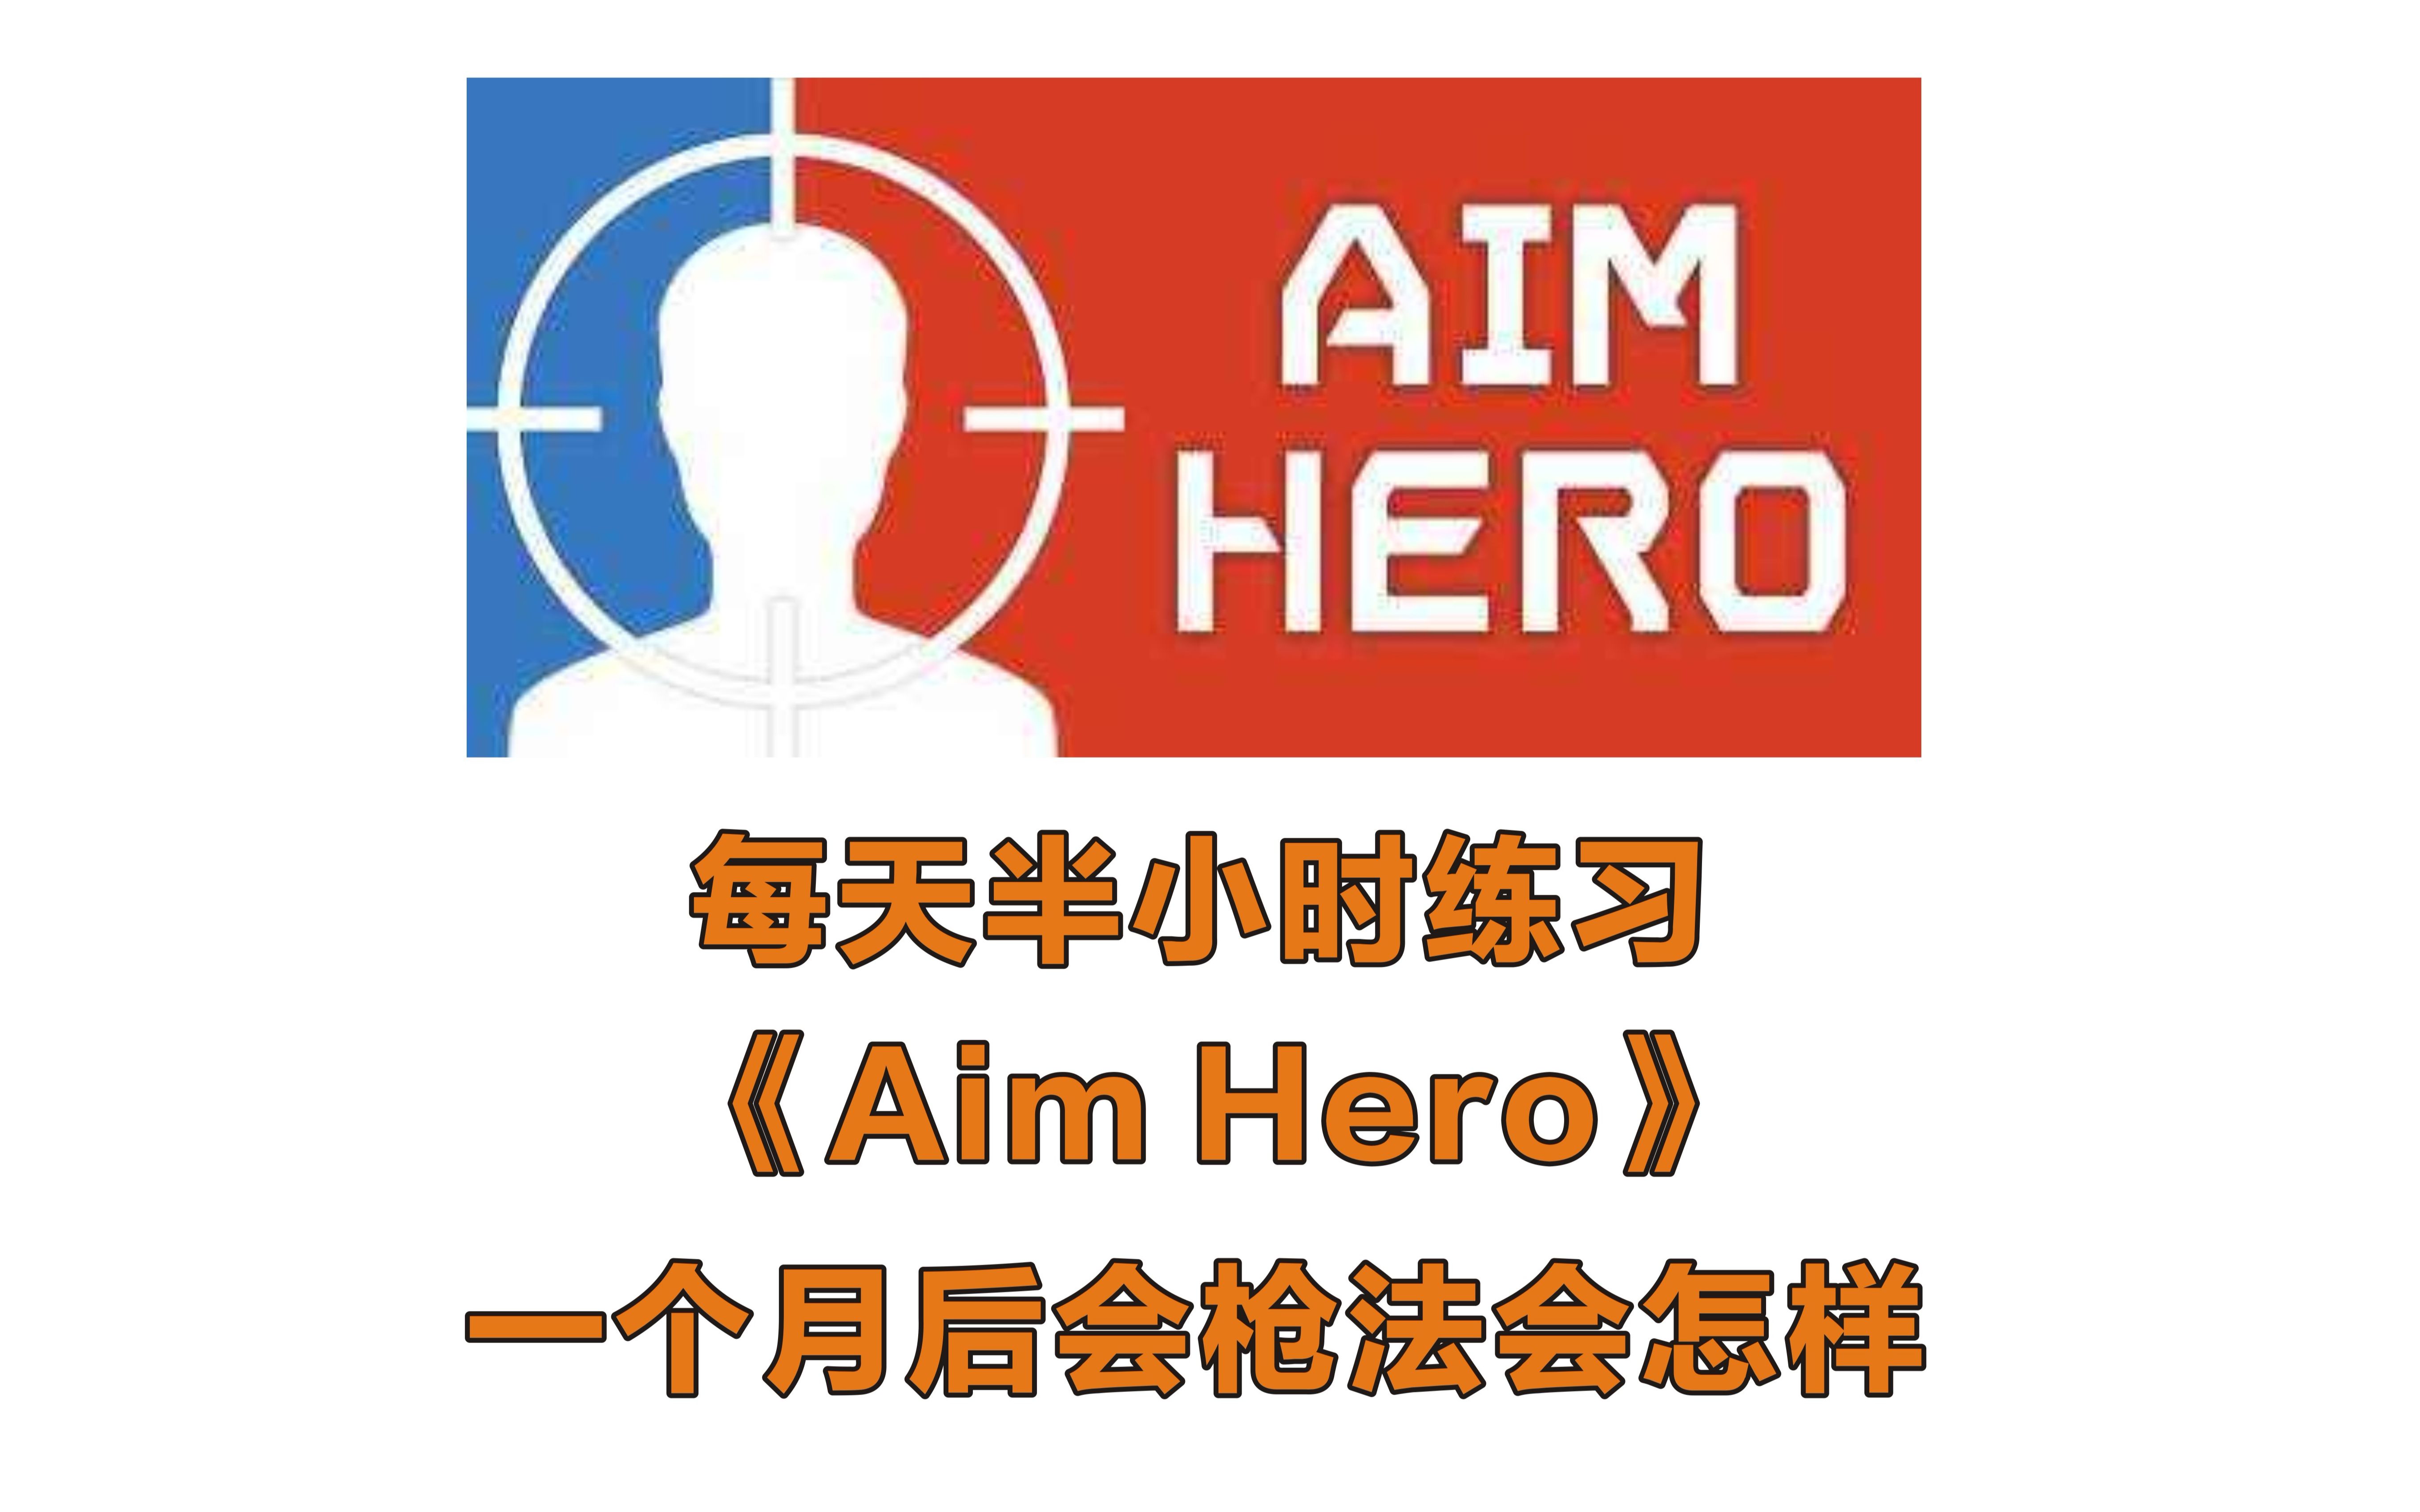 Aim Hero 一个菜鸟每天练枪半小时 一个月后玩吃鸡枪法会怎样 哔哩哔哩 つロ干杯 Bilibili